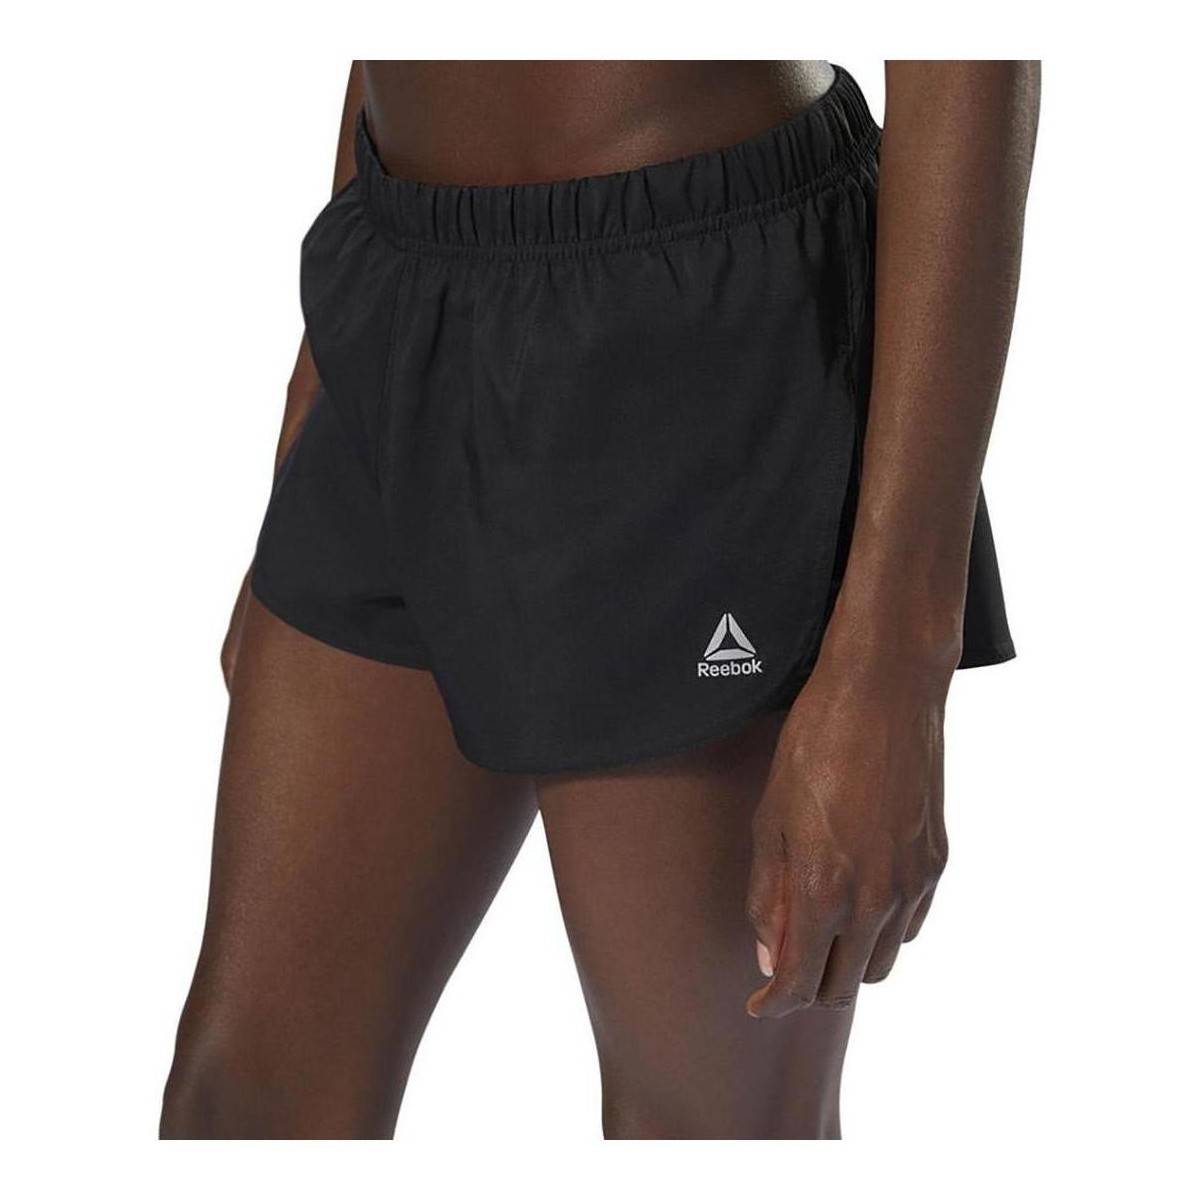 textil Mujer Shorts / Bermudas Reebok Sport CY4680 Negro